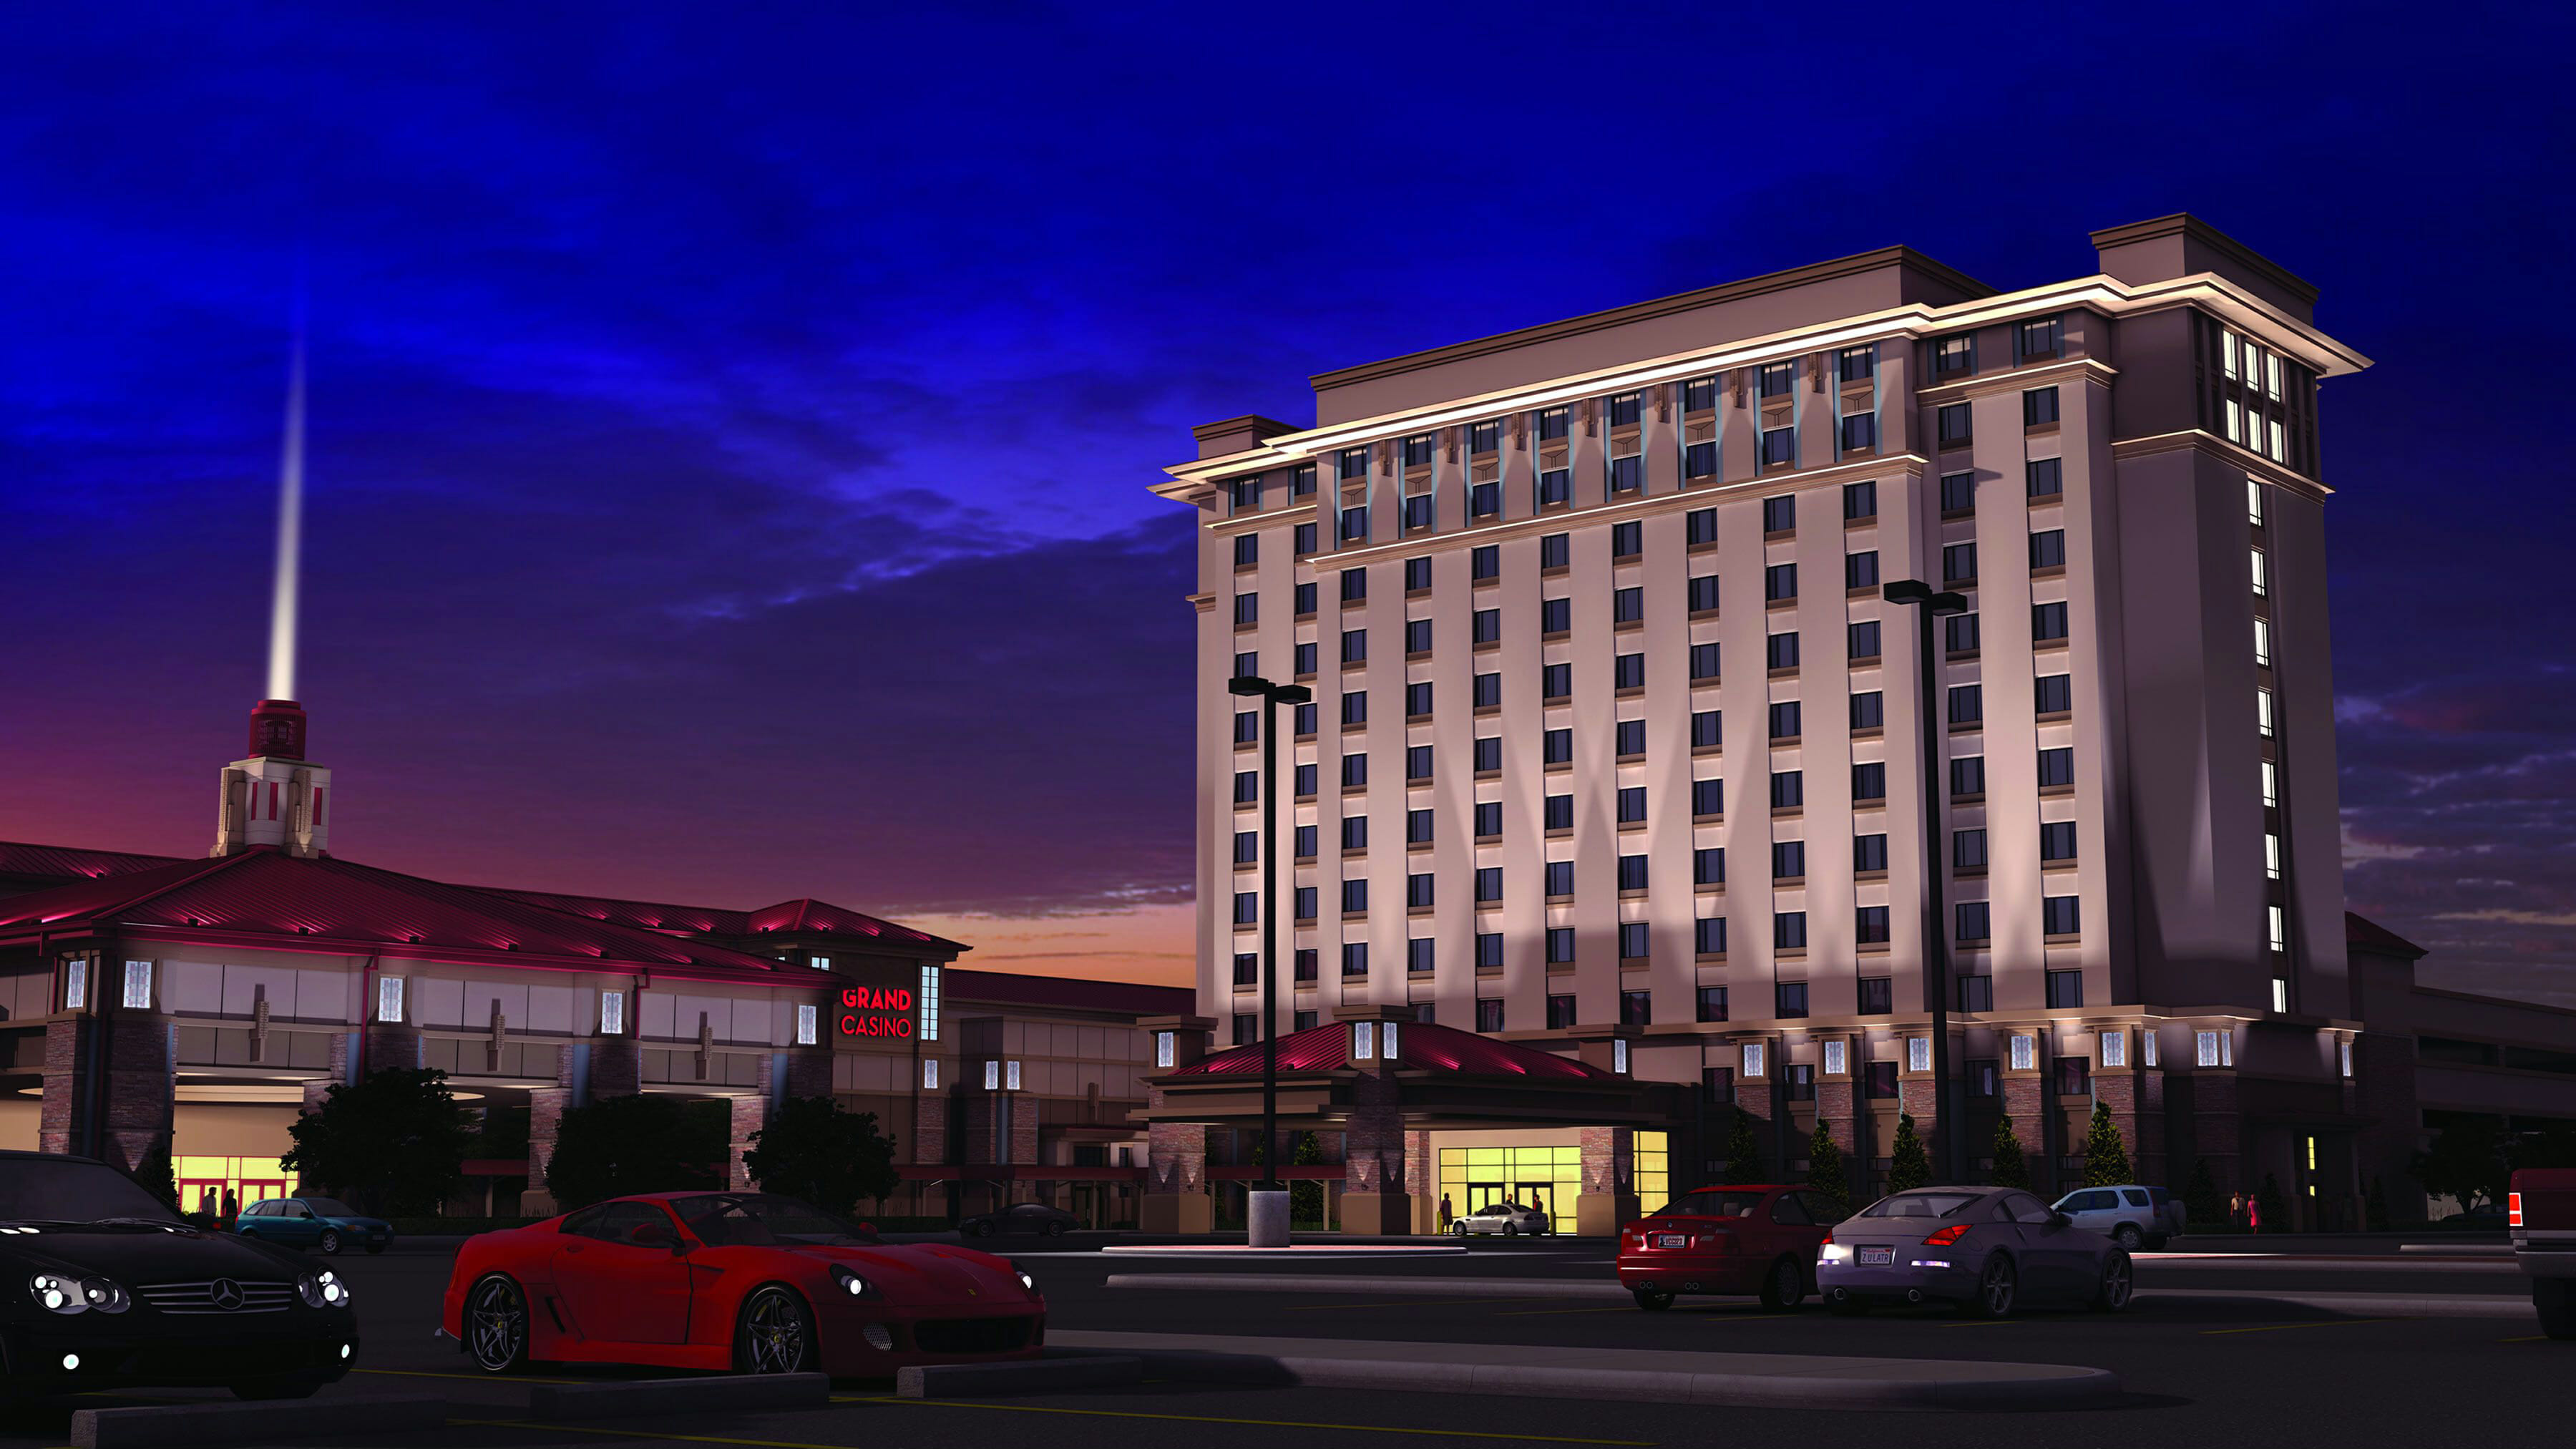 Building view of Grand Casino Hotel Resort